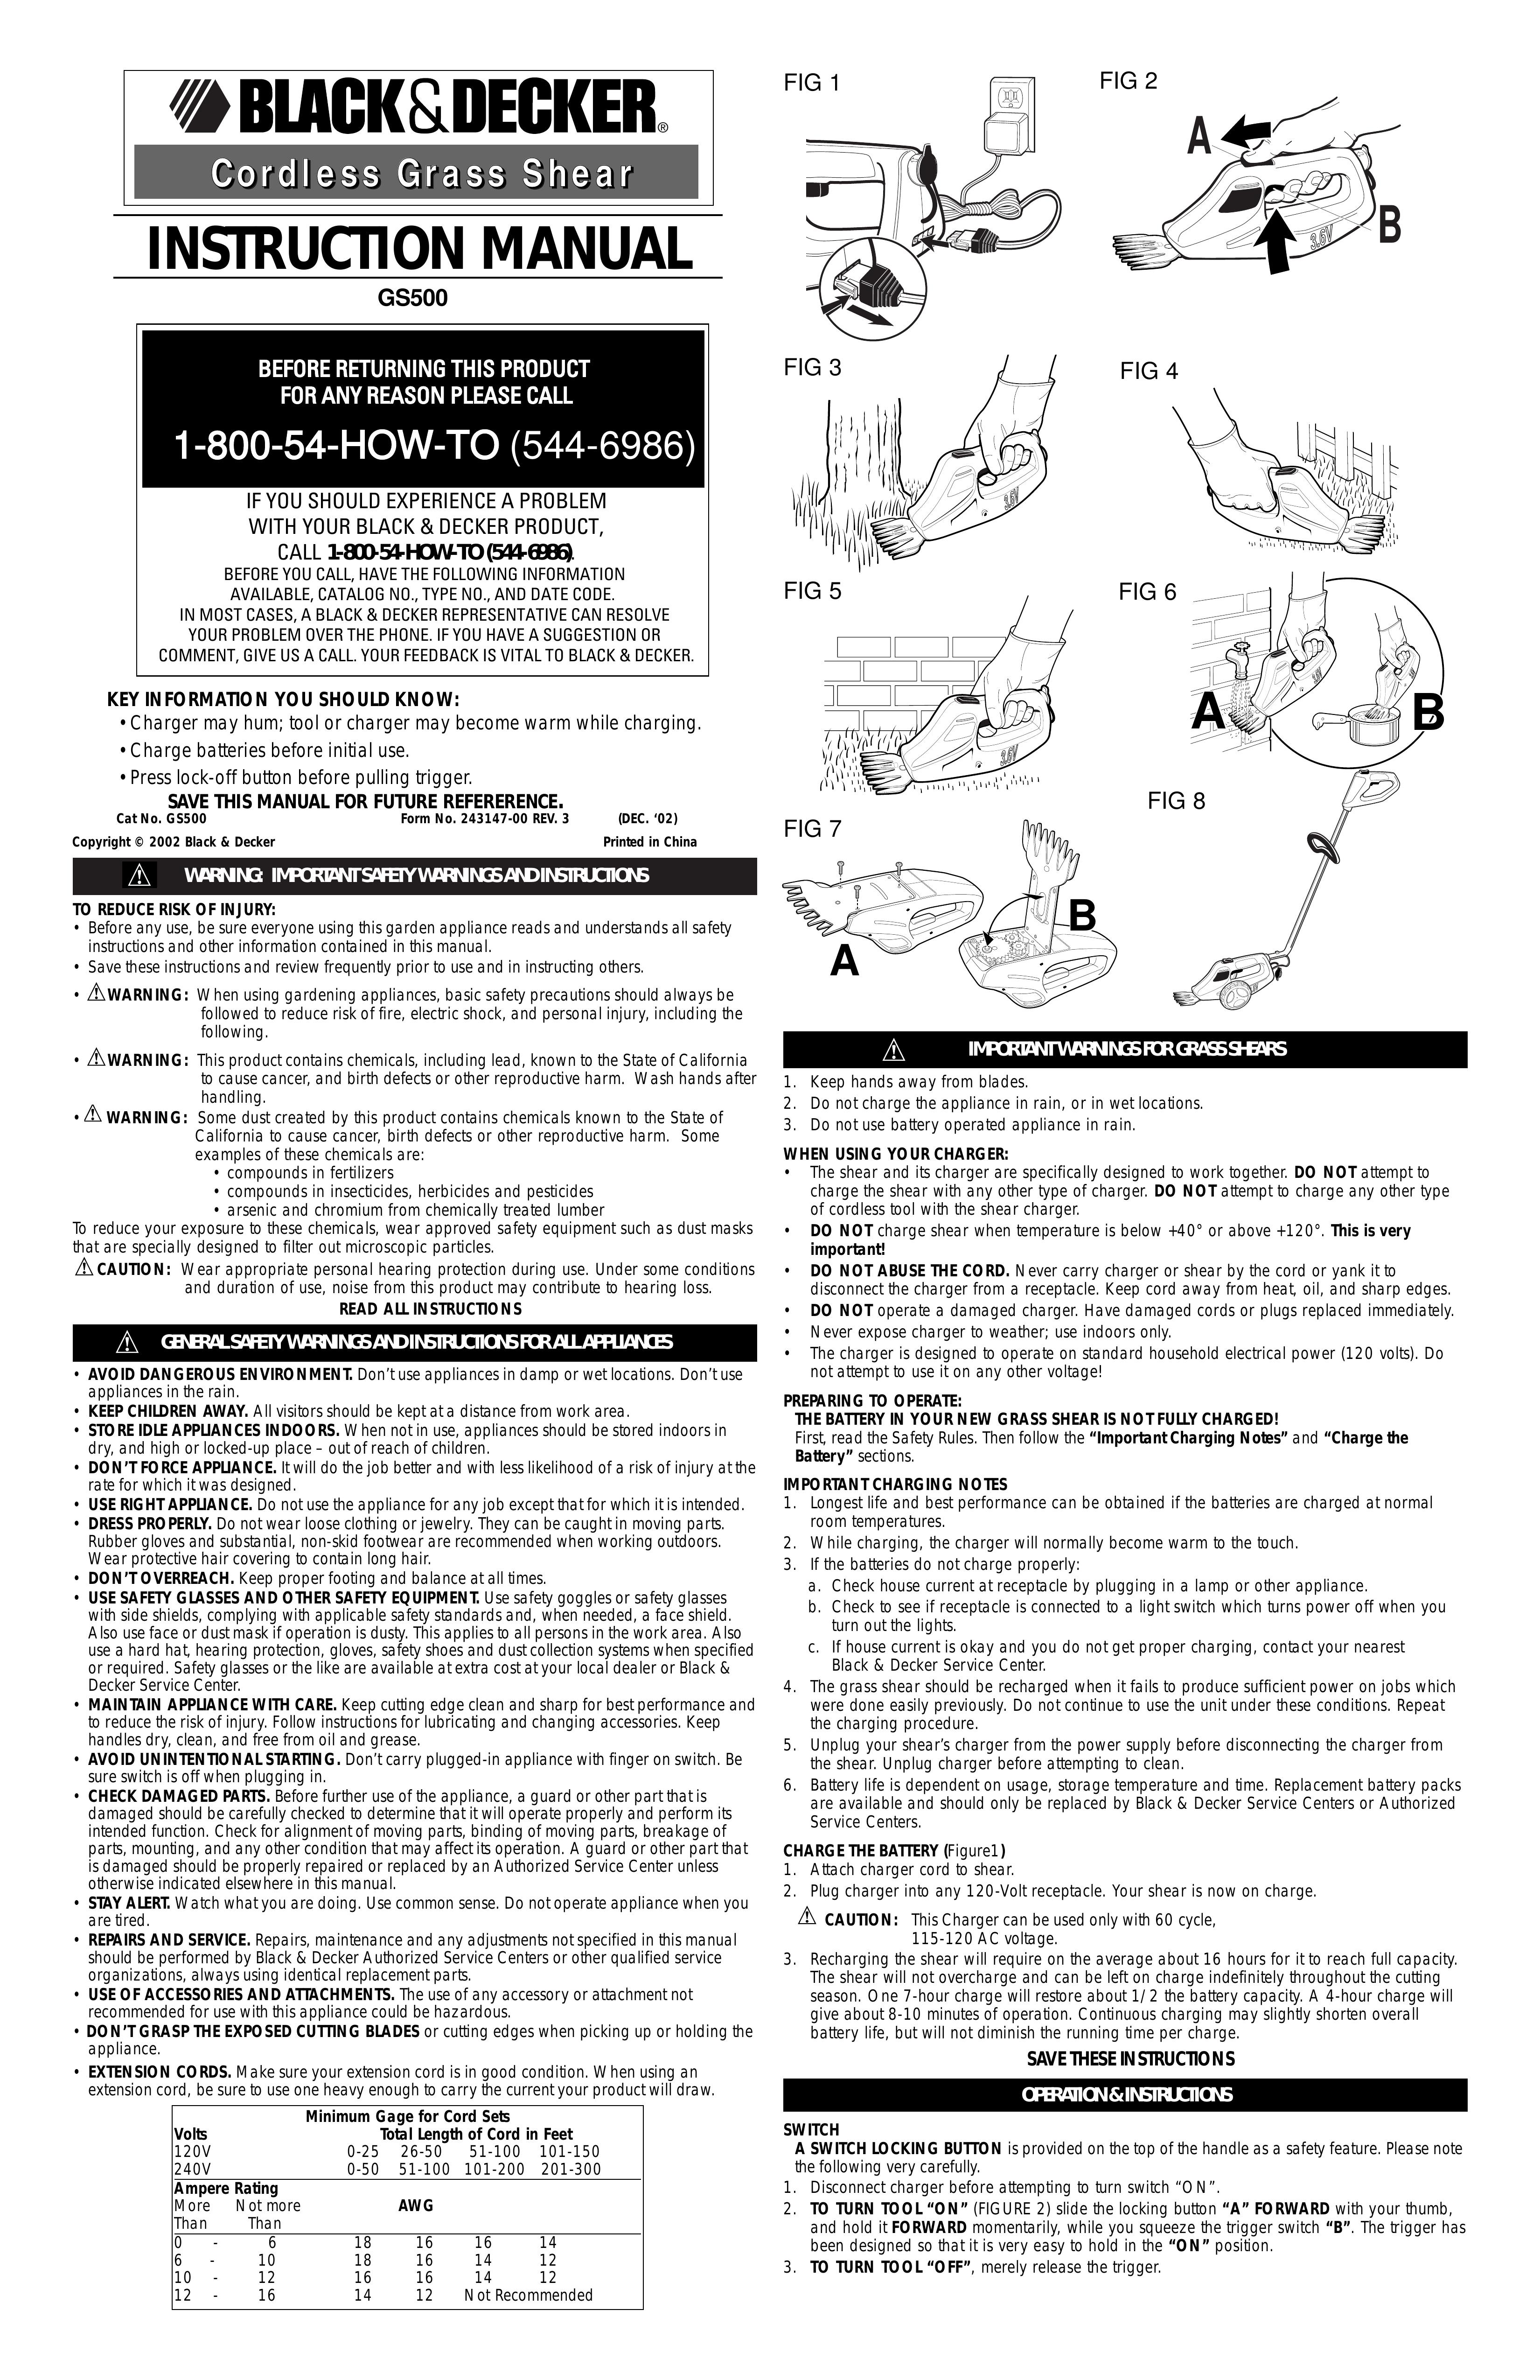 Black & Decker 243147-00 Trimmer User Manual